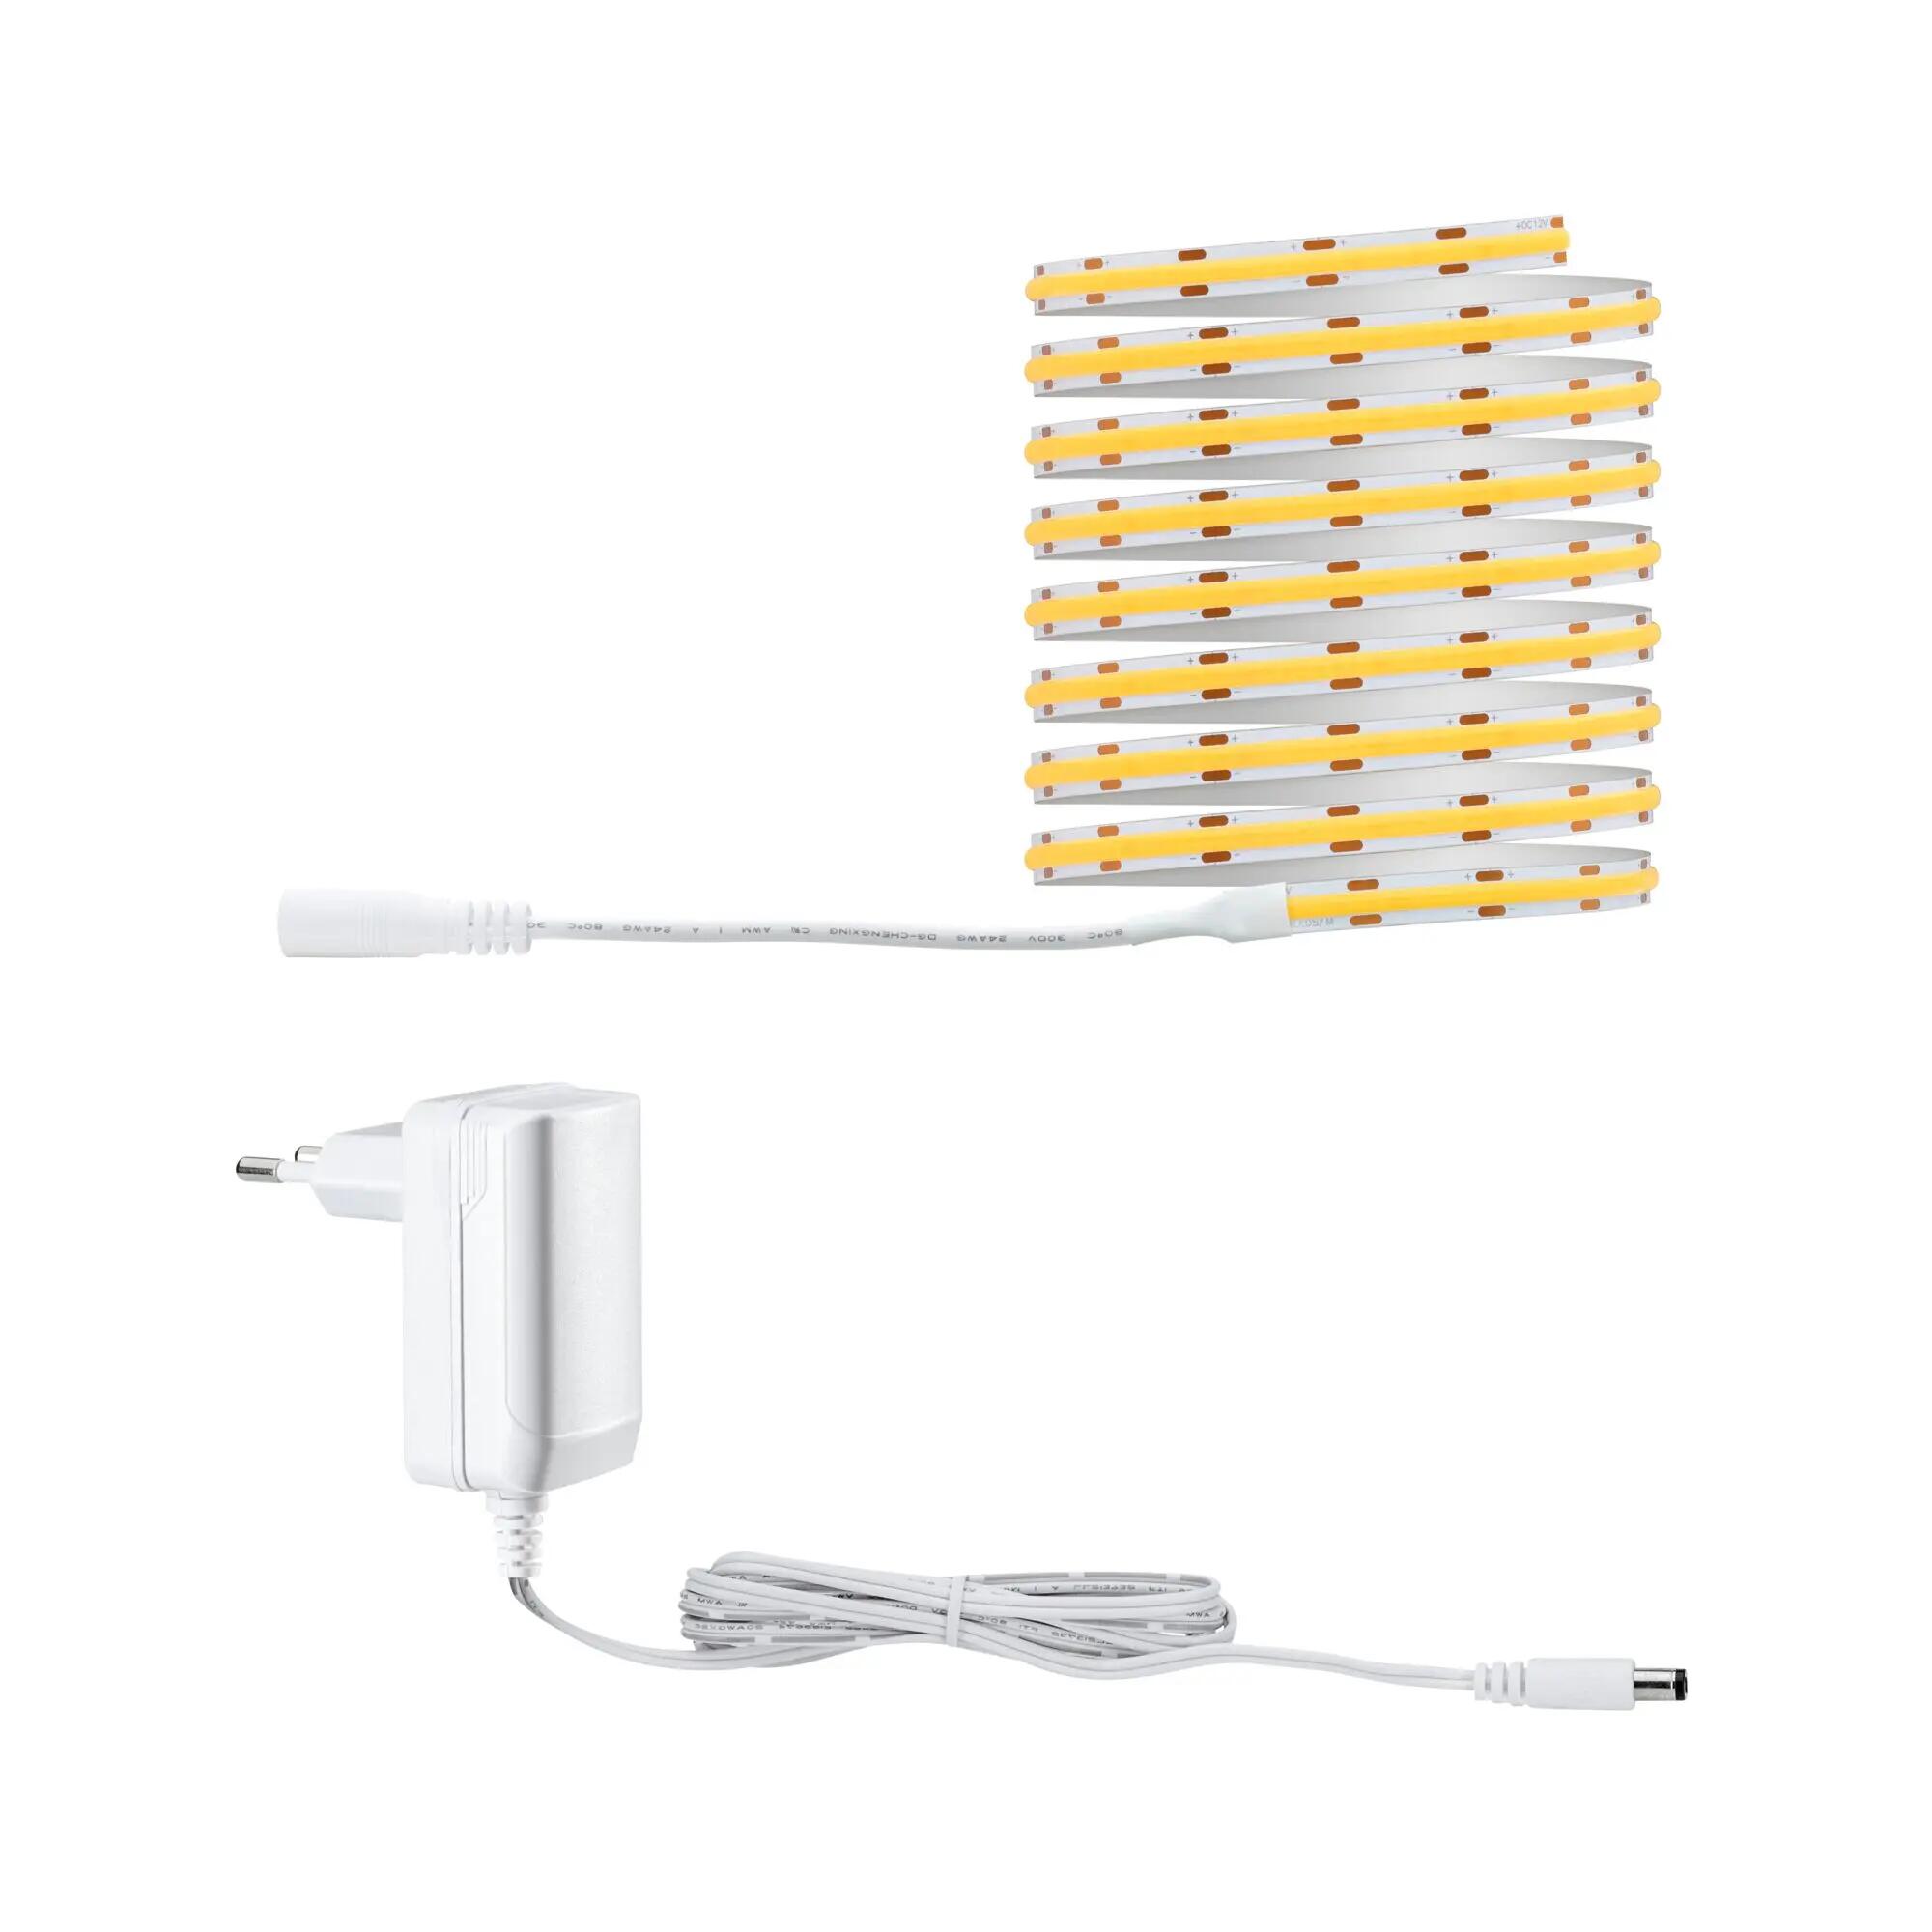 Ruban LED Extensible - 5m - Blanc chaud